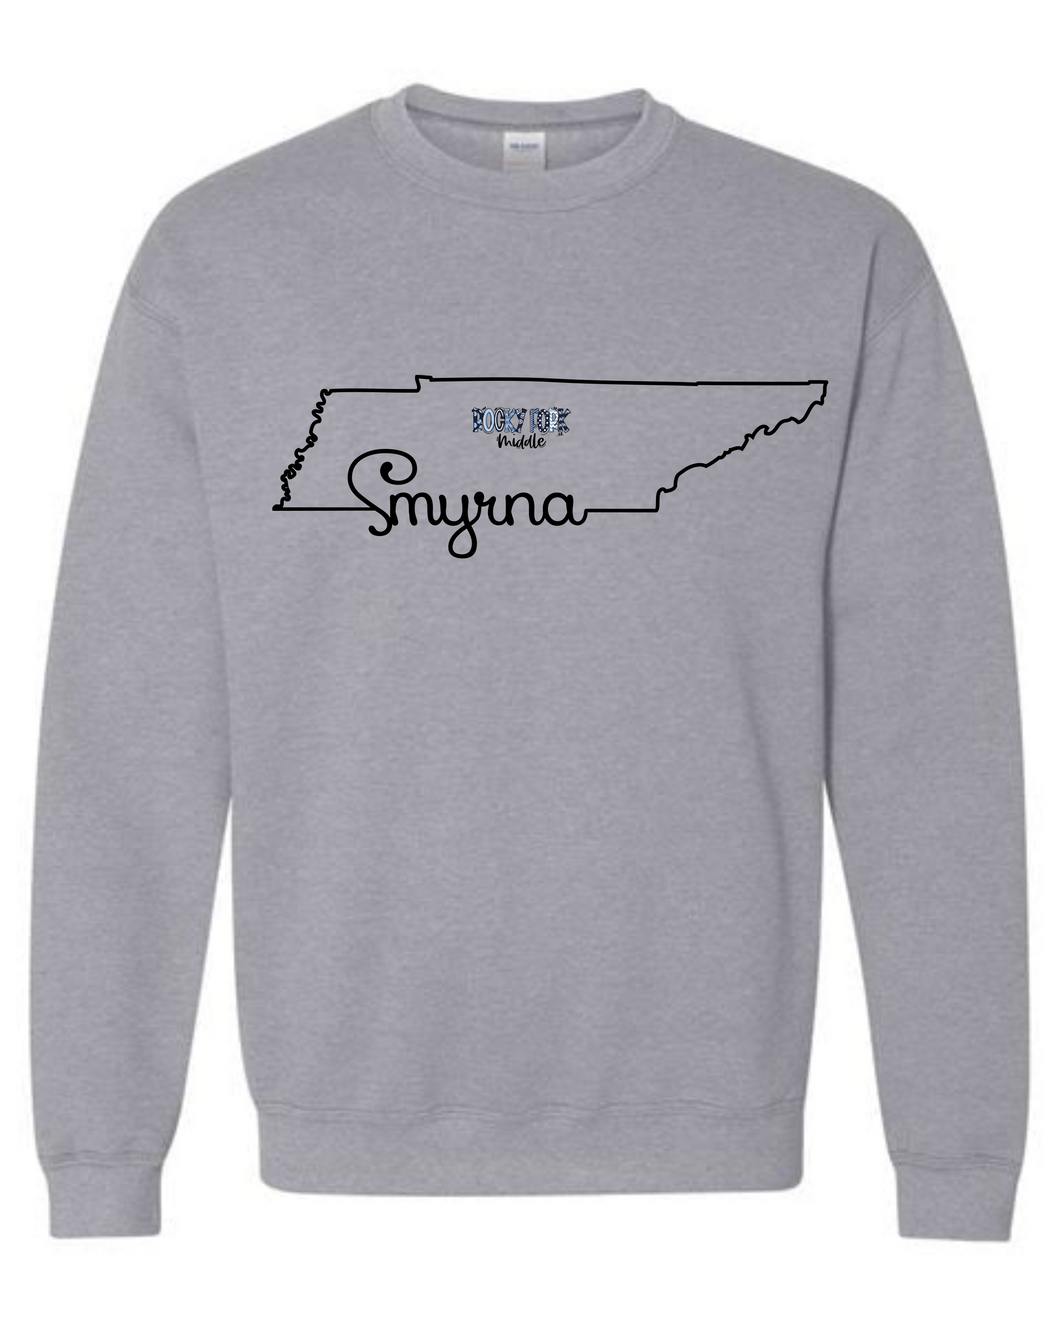 Smyrna Rocky Fork Middle Sweatshirt